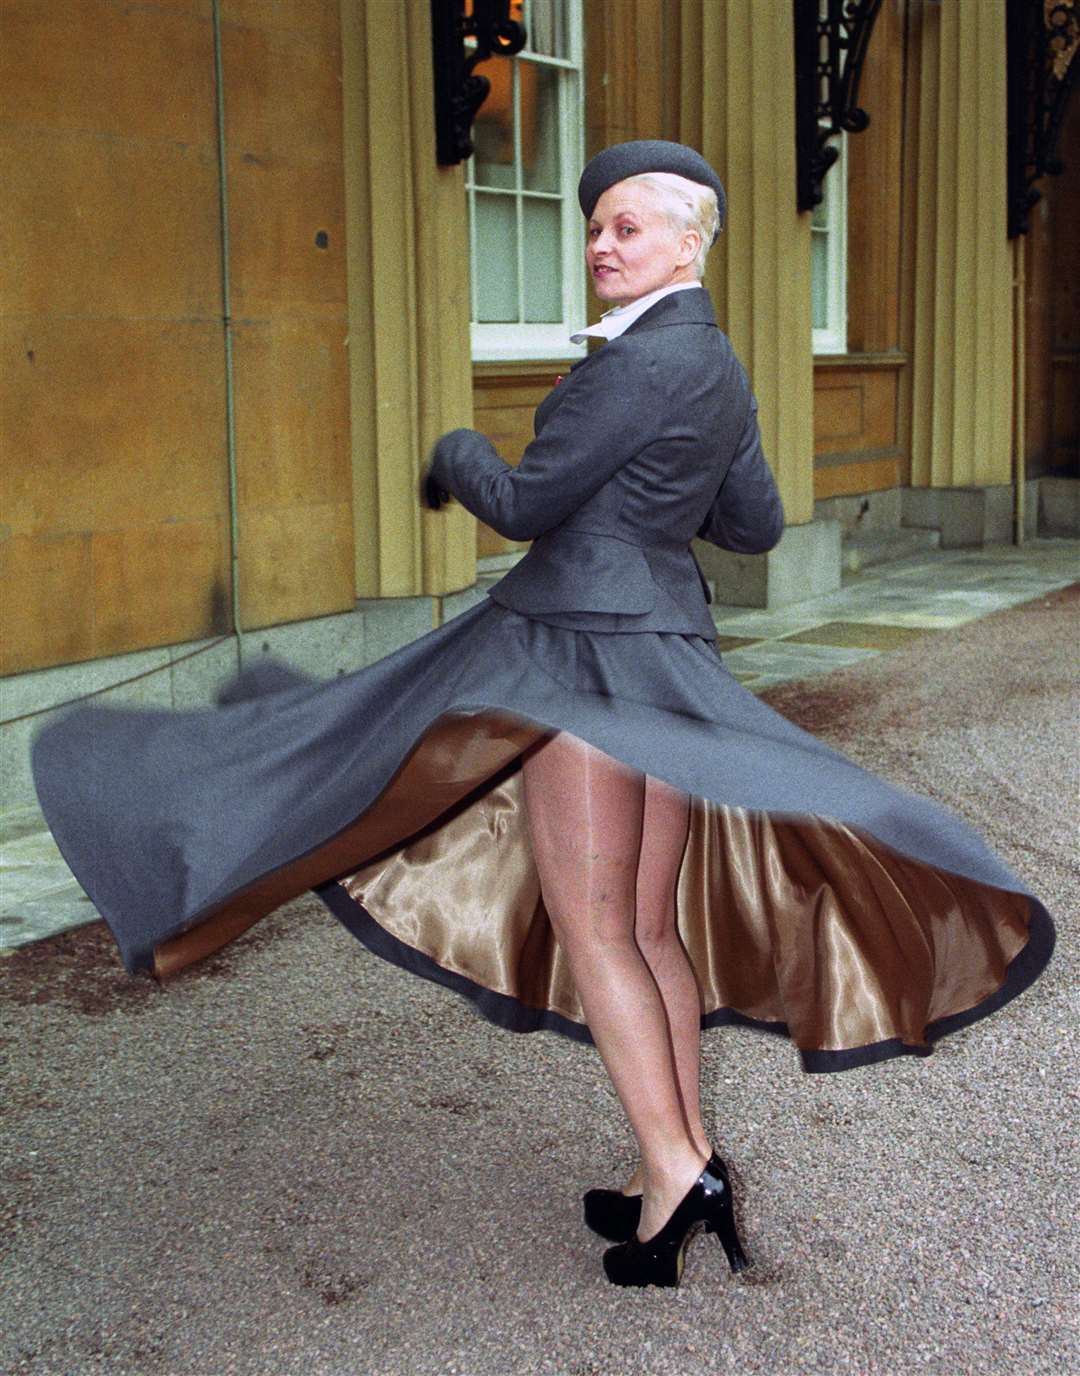 Dame Vivienne Westwood wore no knickers at Buckingham Palace (Martin Keene/PA)